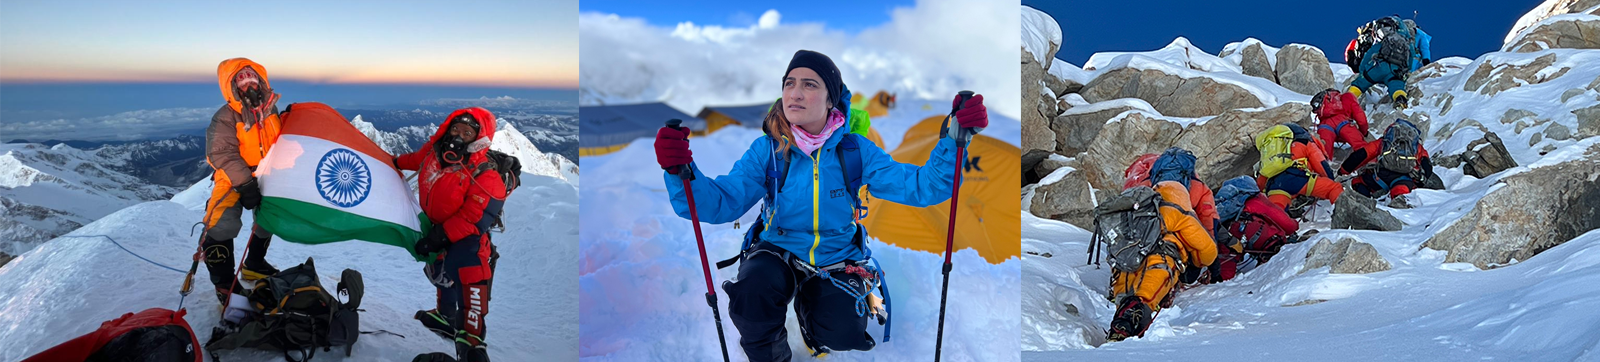 Woman Mountaineer Baljeet Kaur Who Scaled Heights of Human Endurance